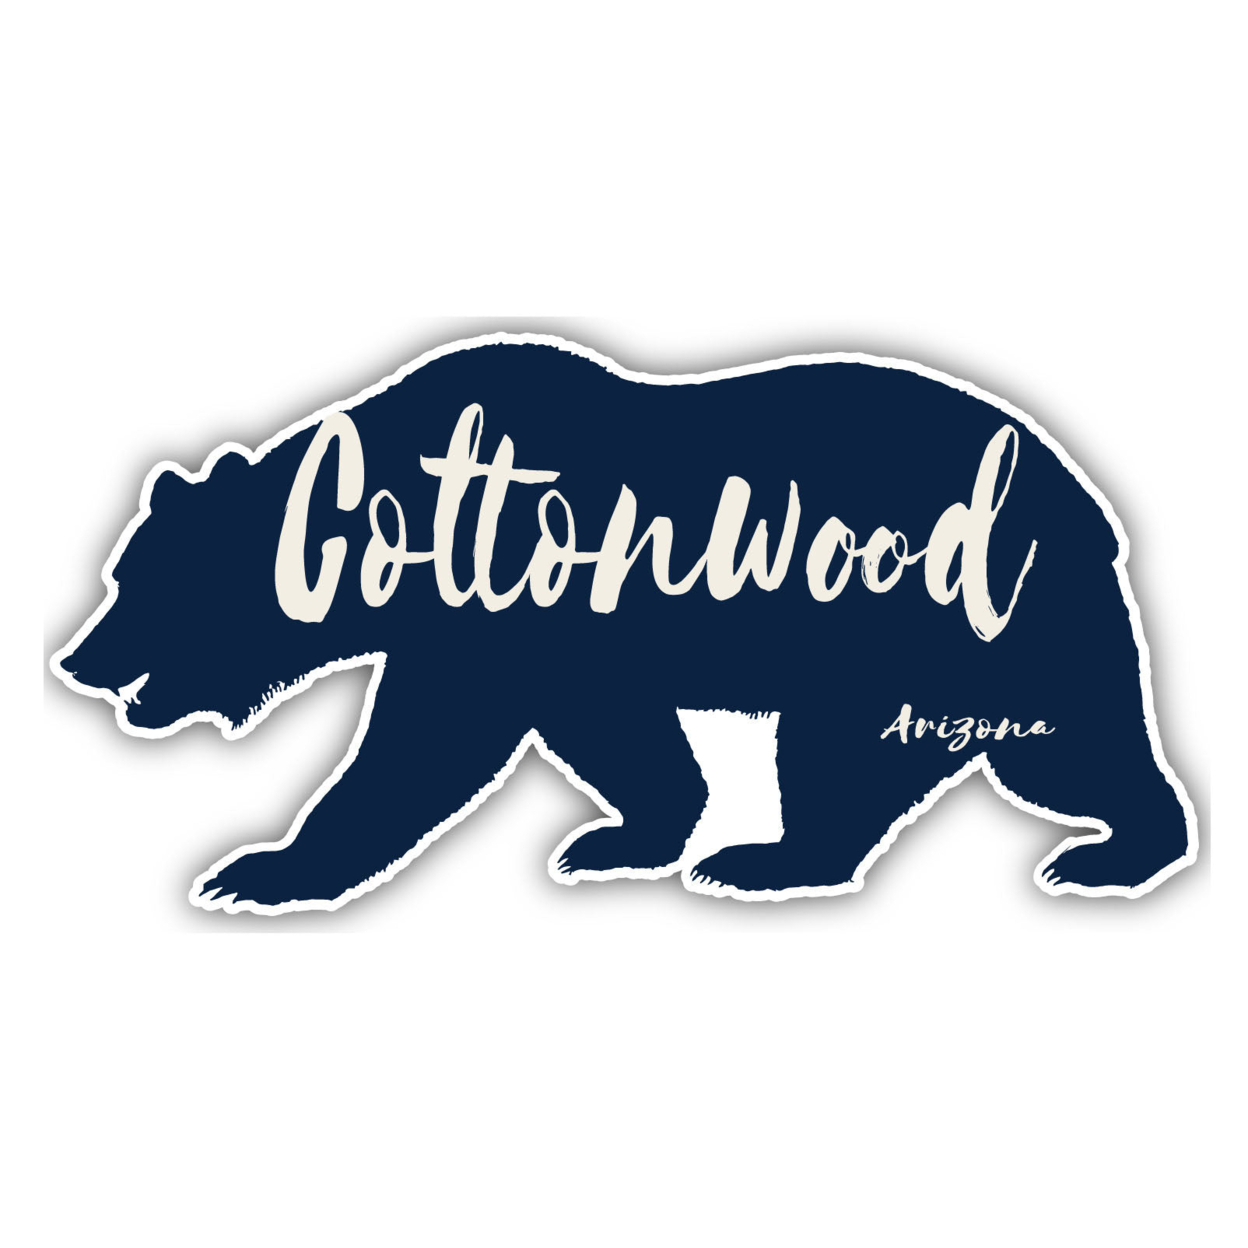 Cottonwood Arizona Souvenir Decorative Stickers (Choose Theme And Size) - Single Unit, 10-Inch, Camp Life